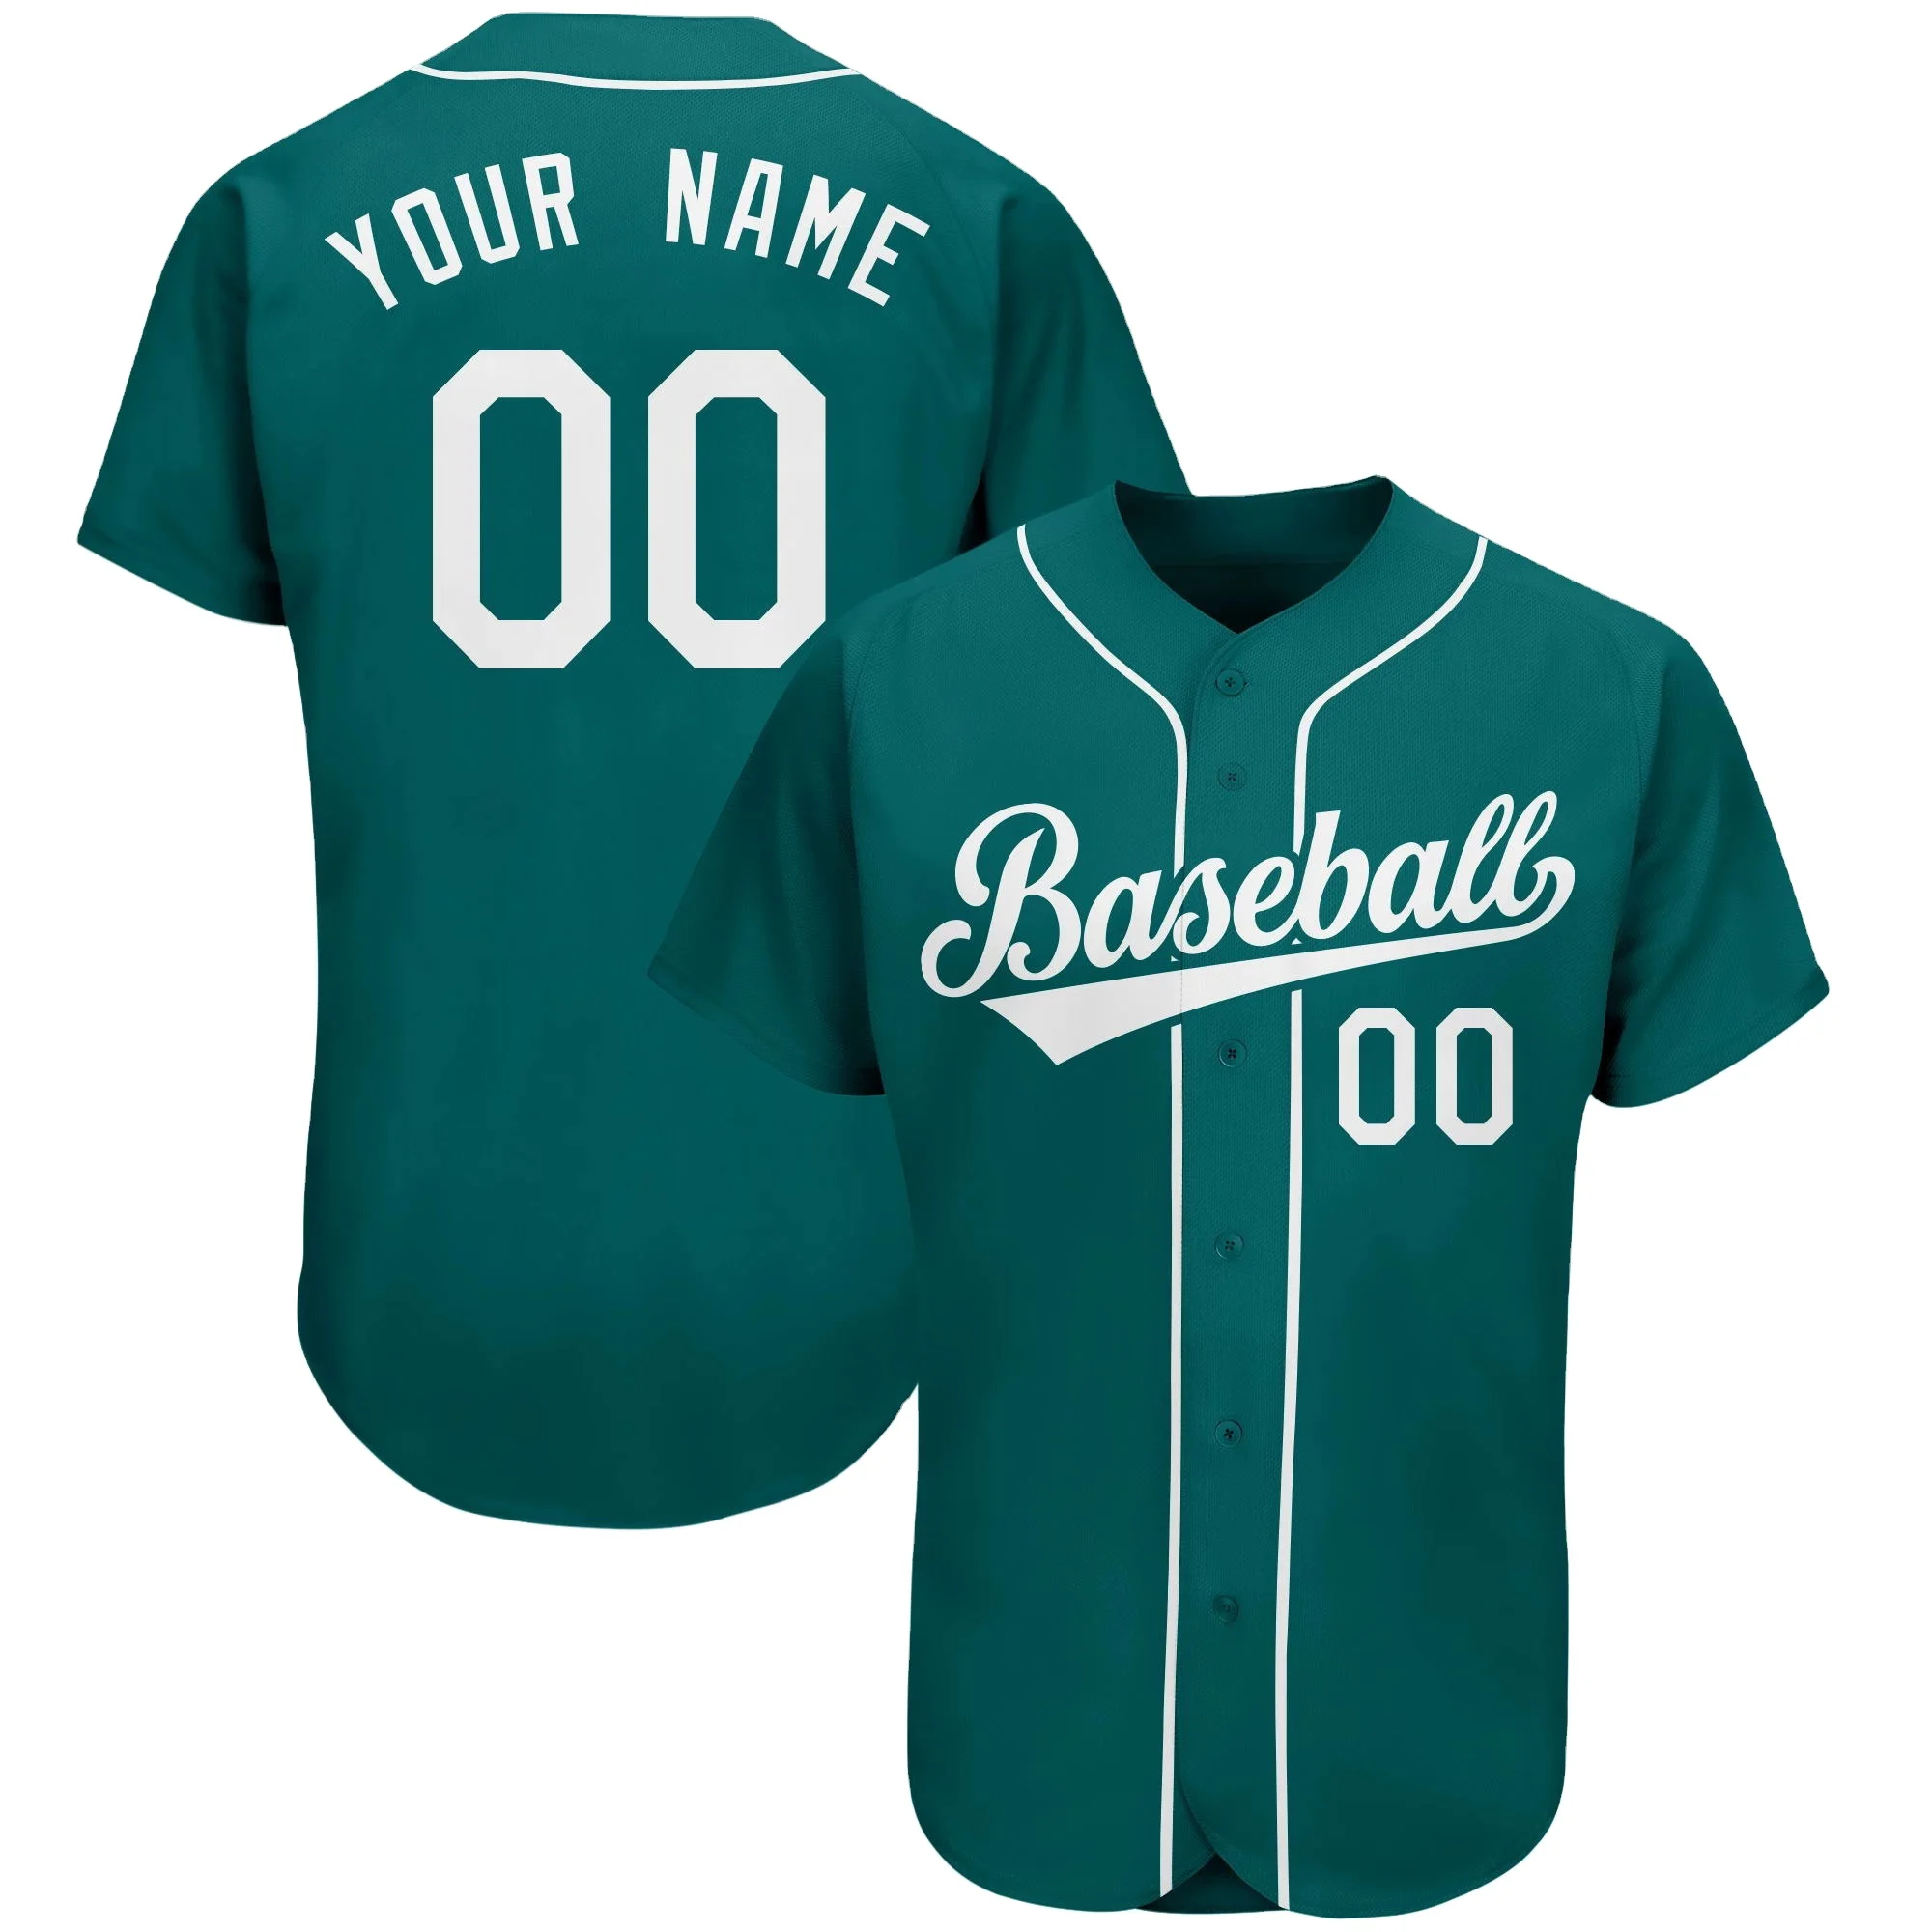 Design Cheap Baseball Uniforms T Shirt Custom Blank Baseball